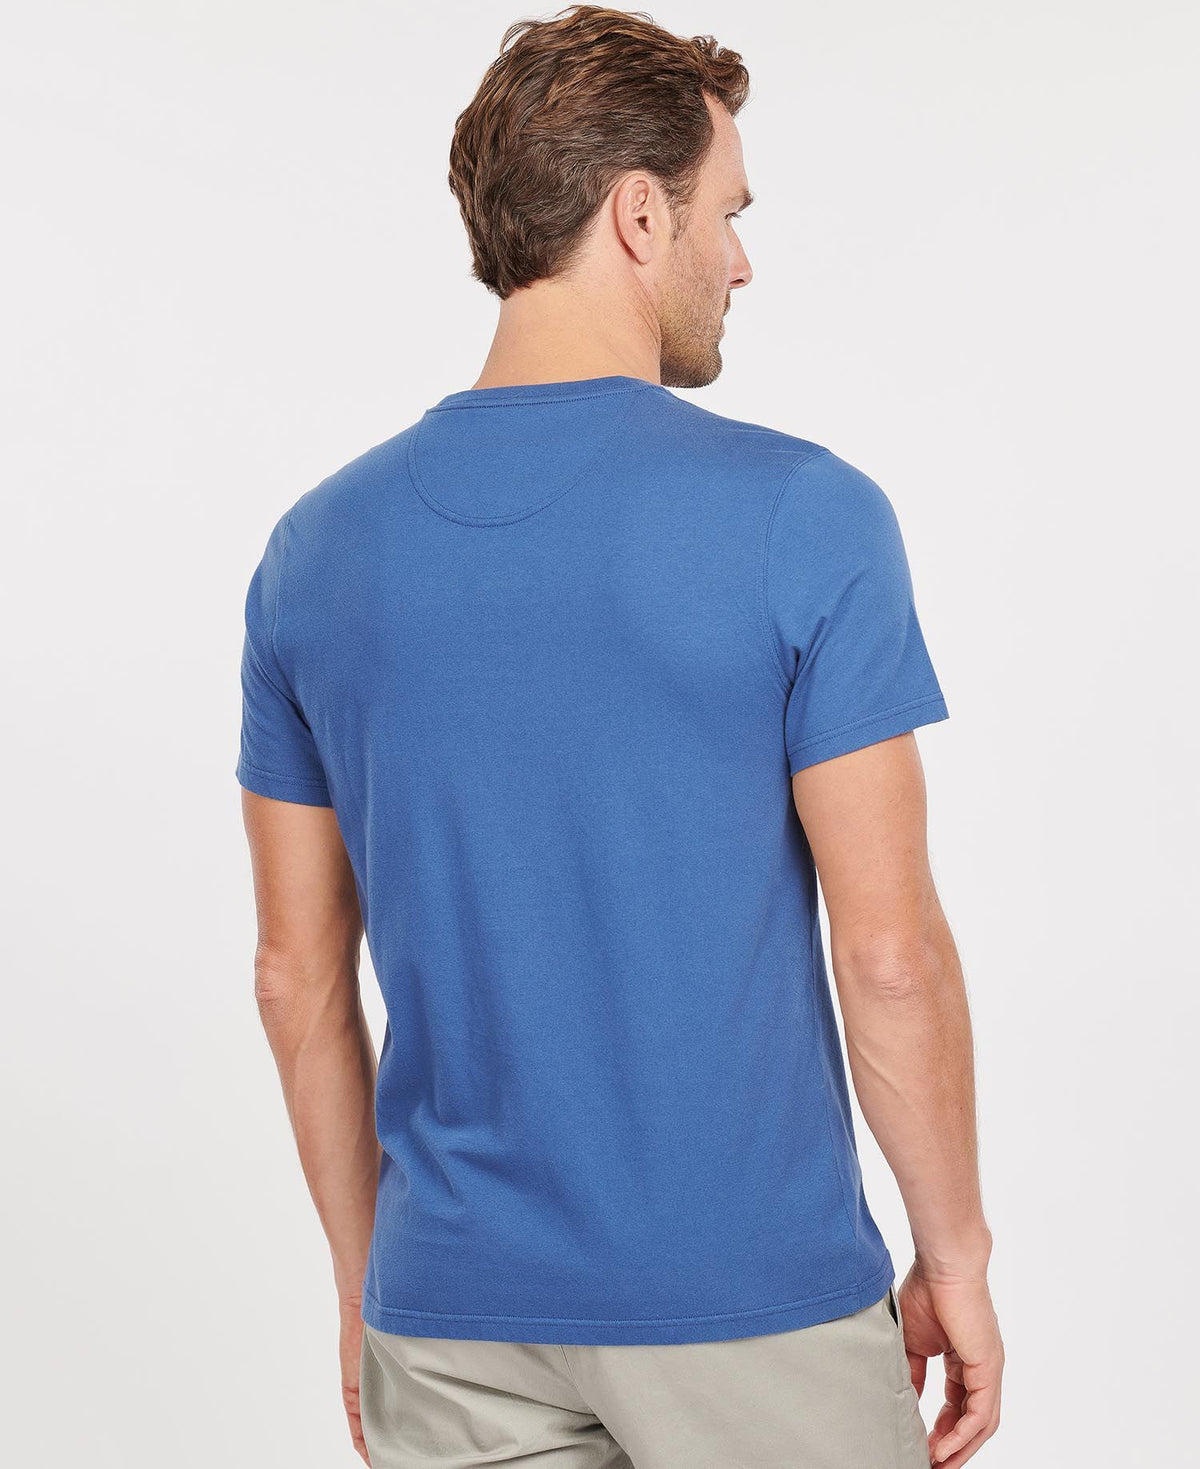 Barbour Men's Sports T-Shirt - Short Sleeved, 03, Mts0331, Loch Blue